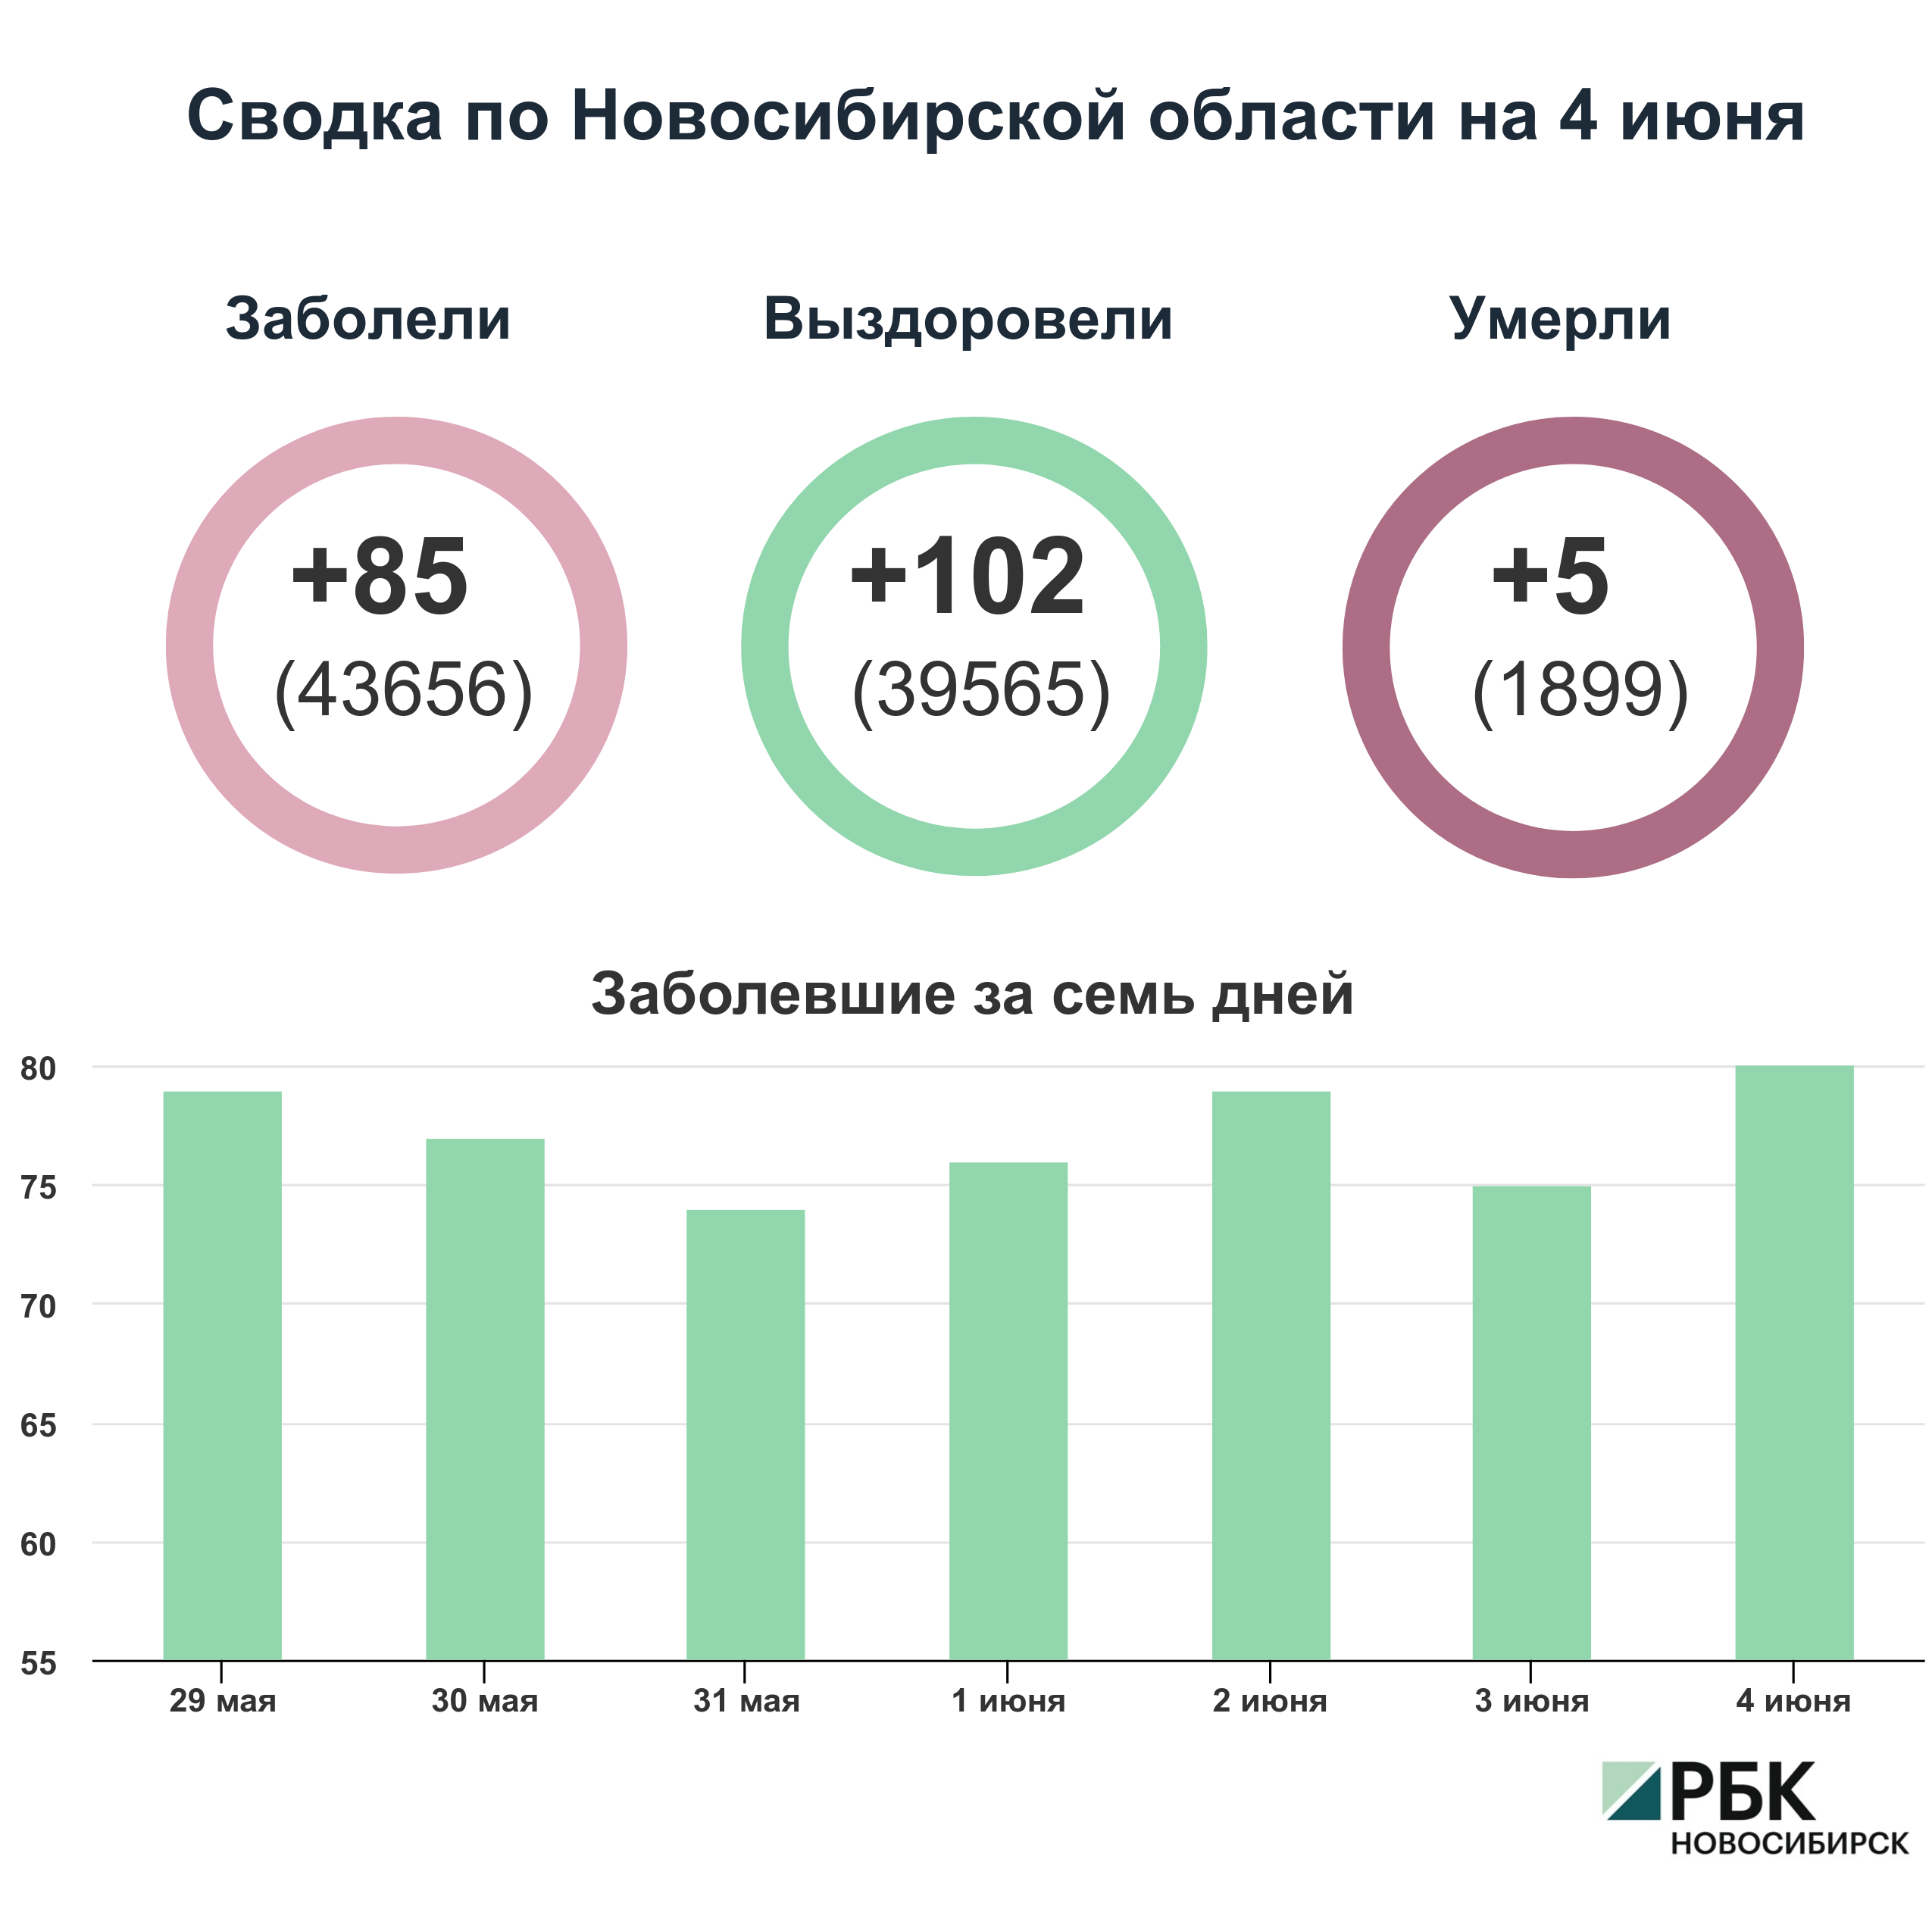 Коронавирус в Новосибирске: сводка на 4 июня